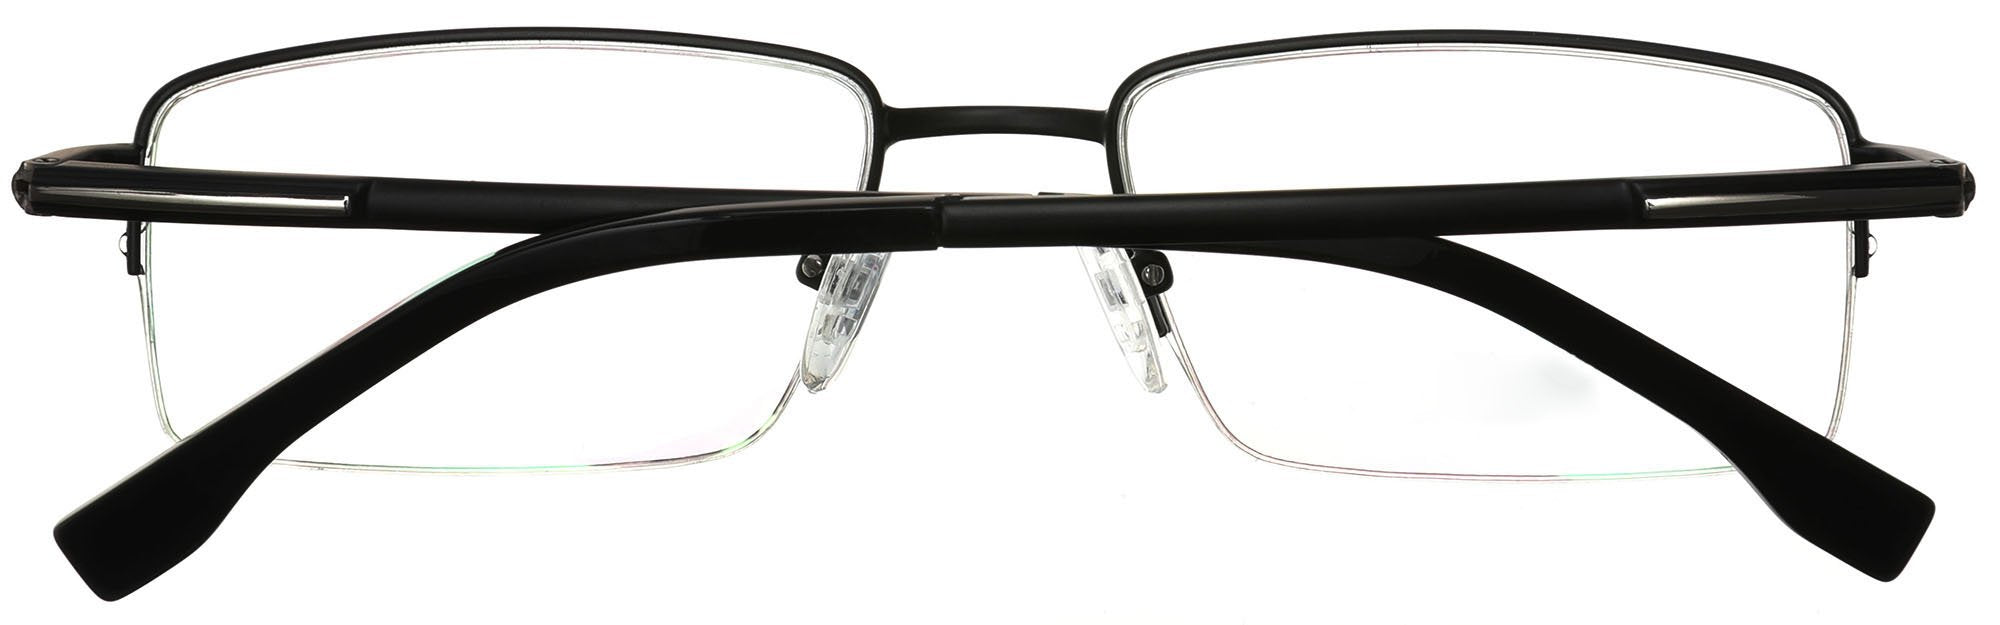 Tango Optics Metal Rectangle Optical Eyeglasses Frame Luxe Stainless Steel Stephen Hawkens Black For Prescription Lens-Samba Shades